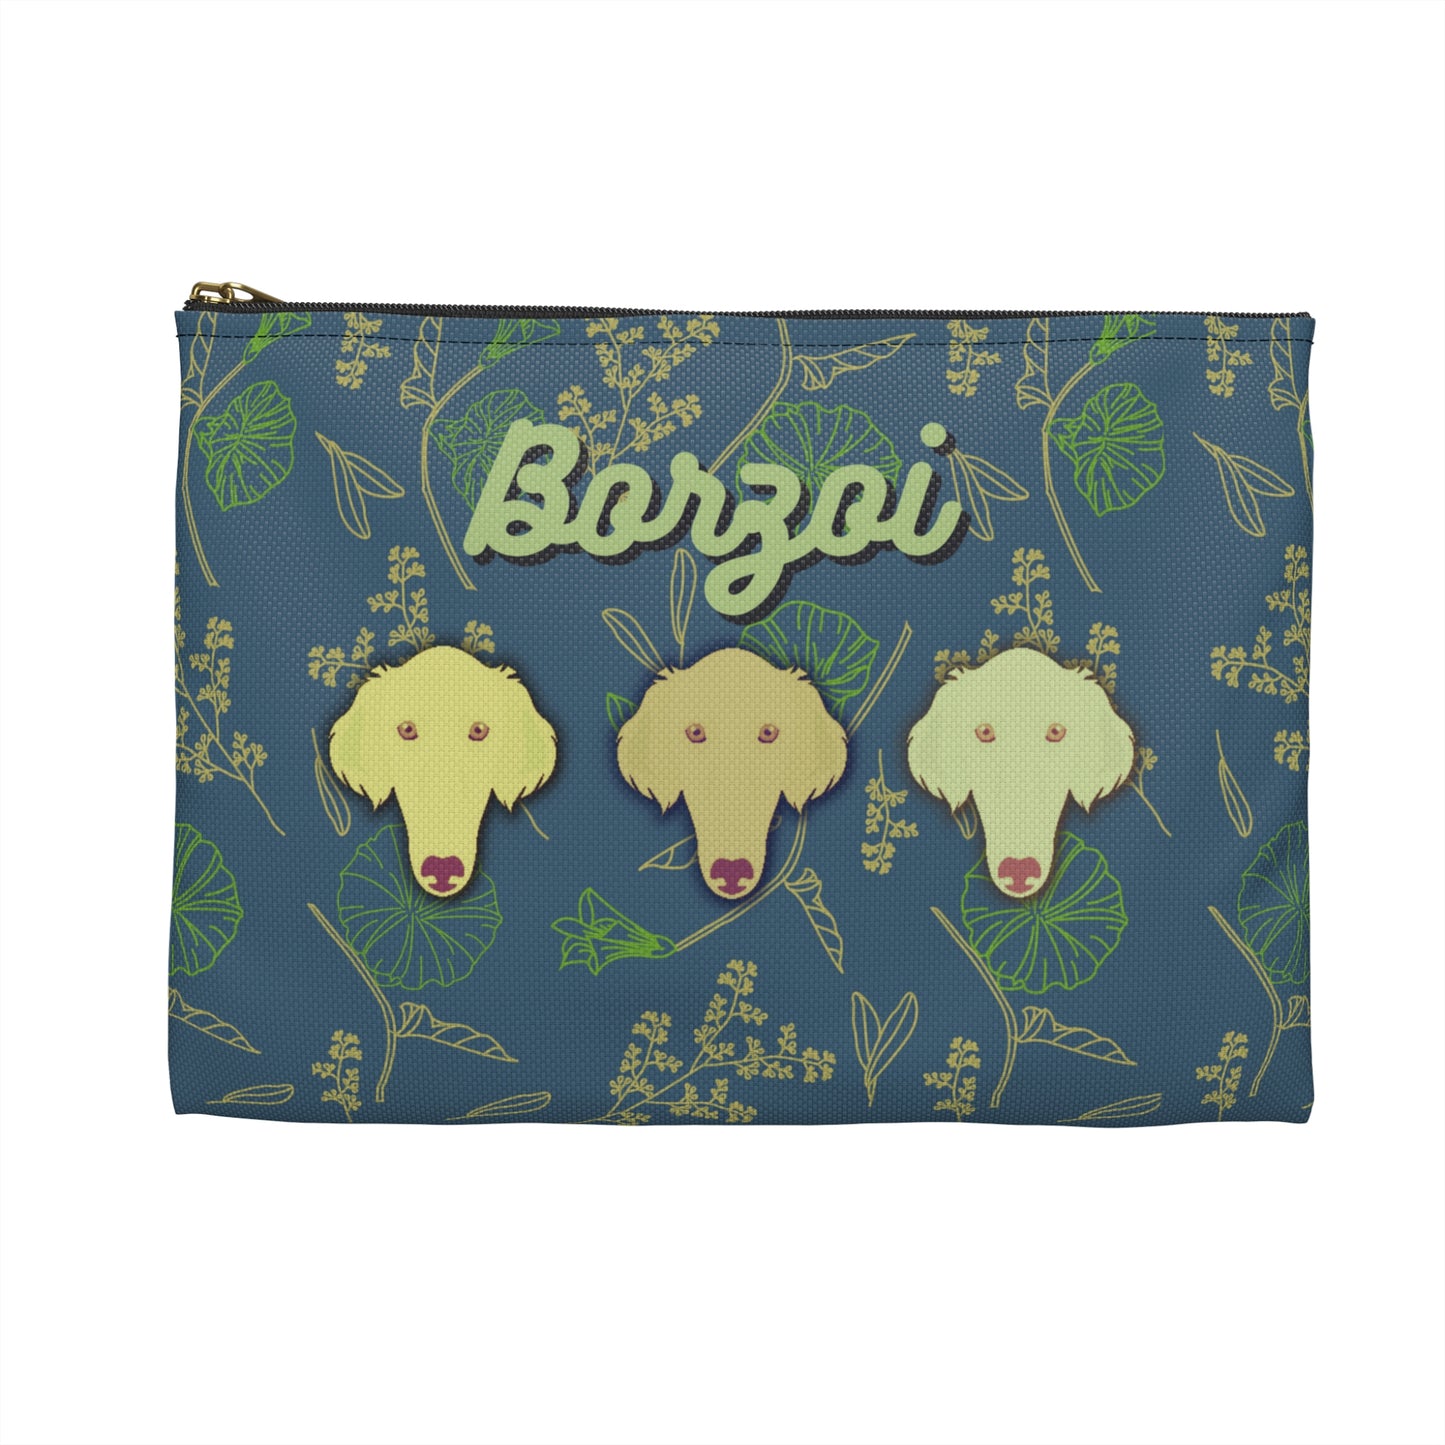 Borzoi Accessory Pouch, Sighthound Bag